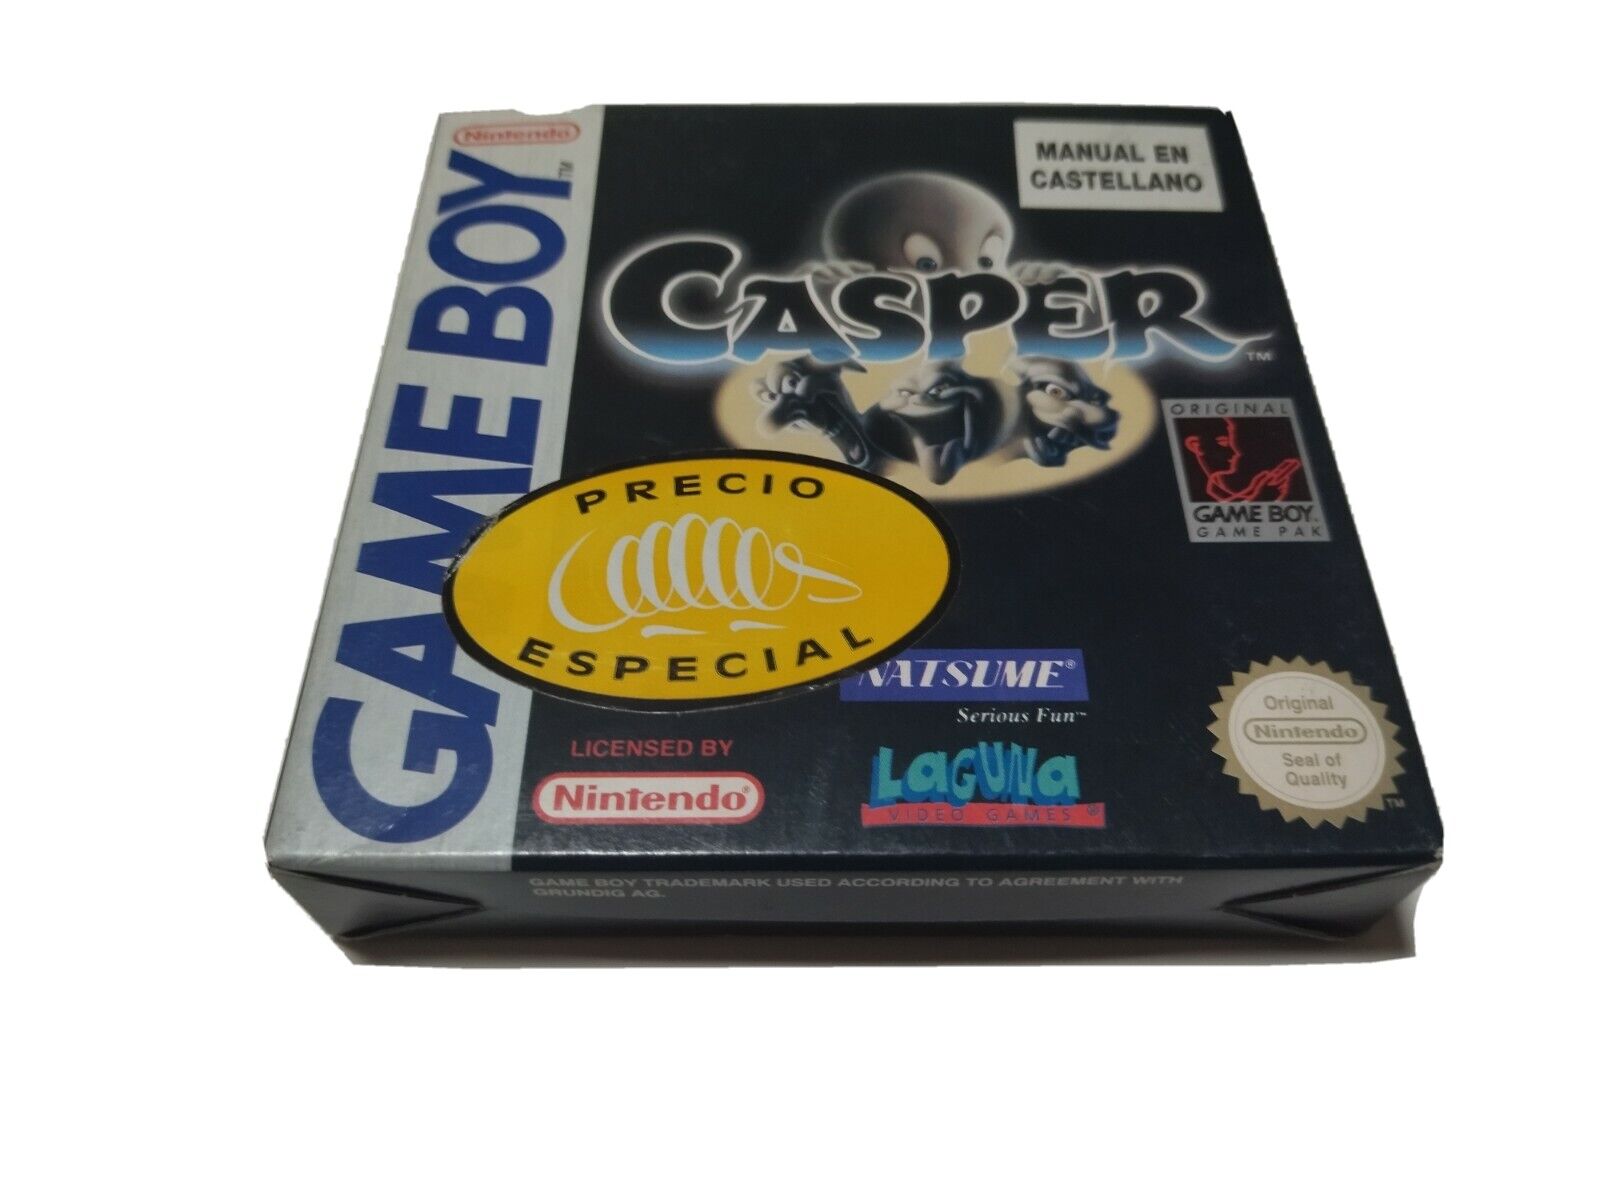 Casper versión Española game boy gameboy gbc